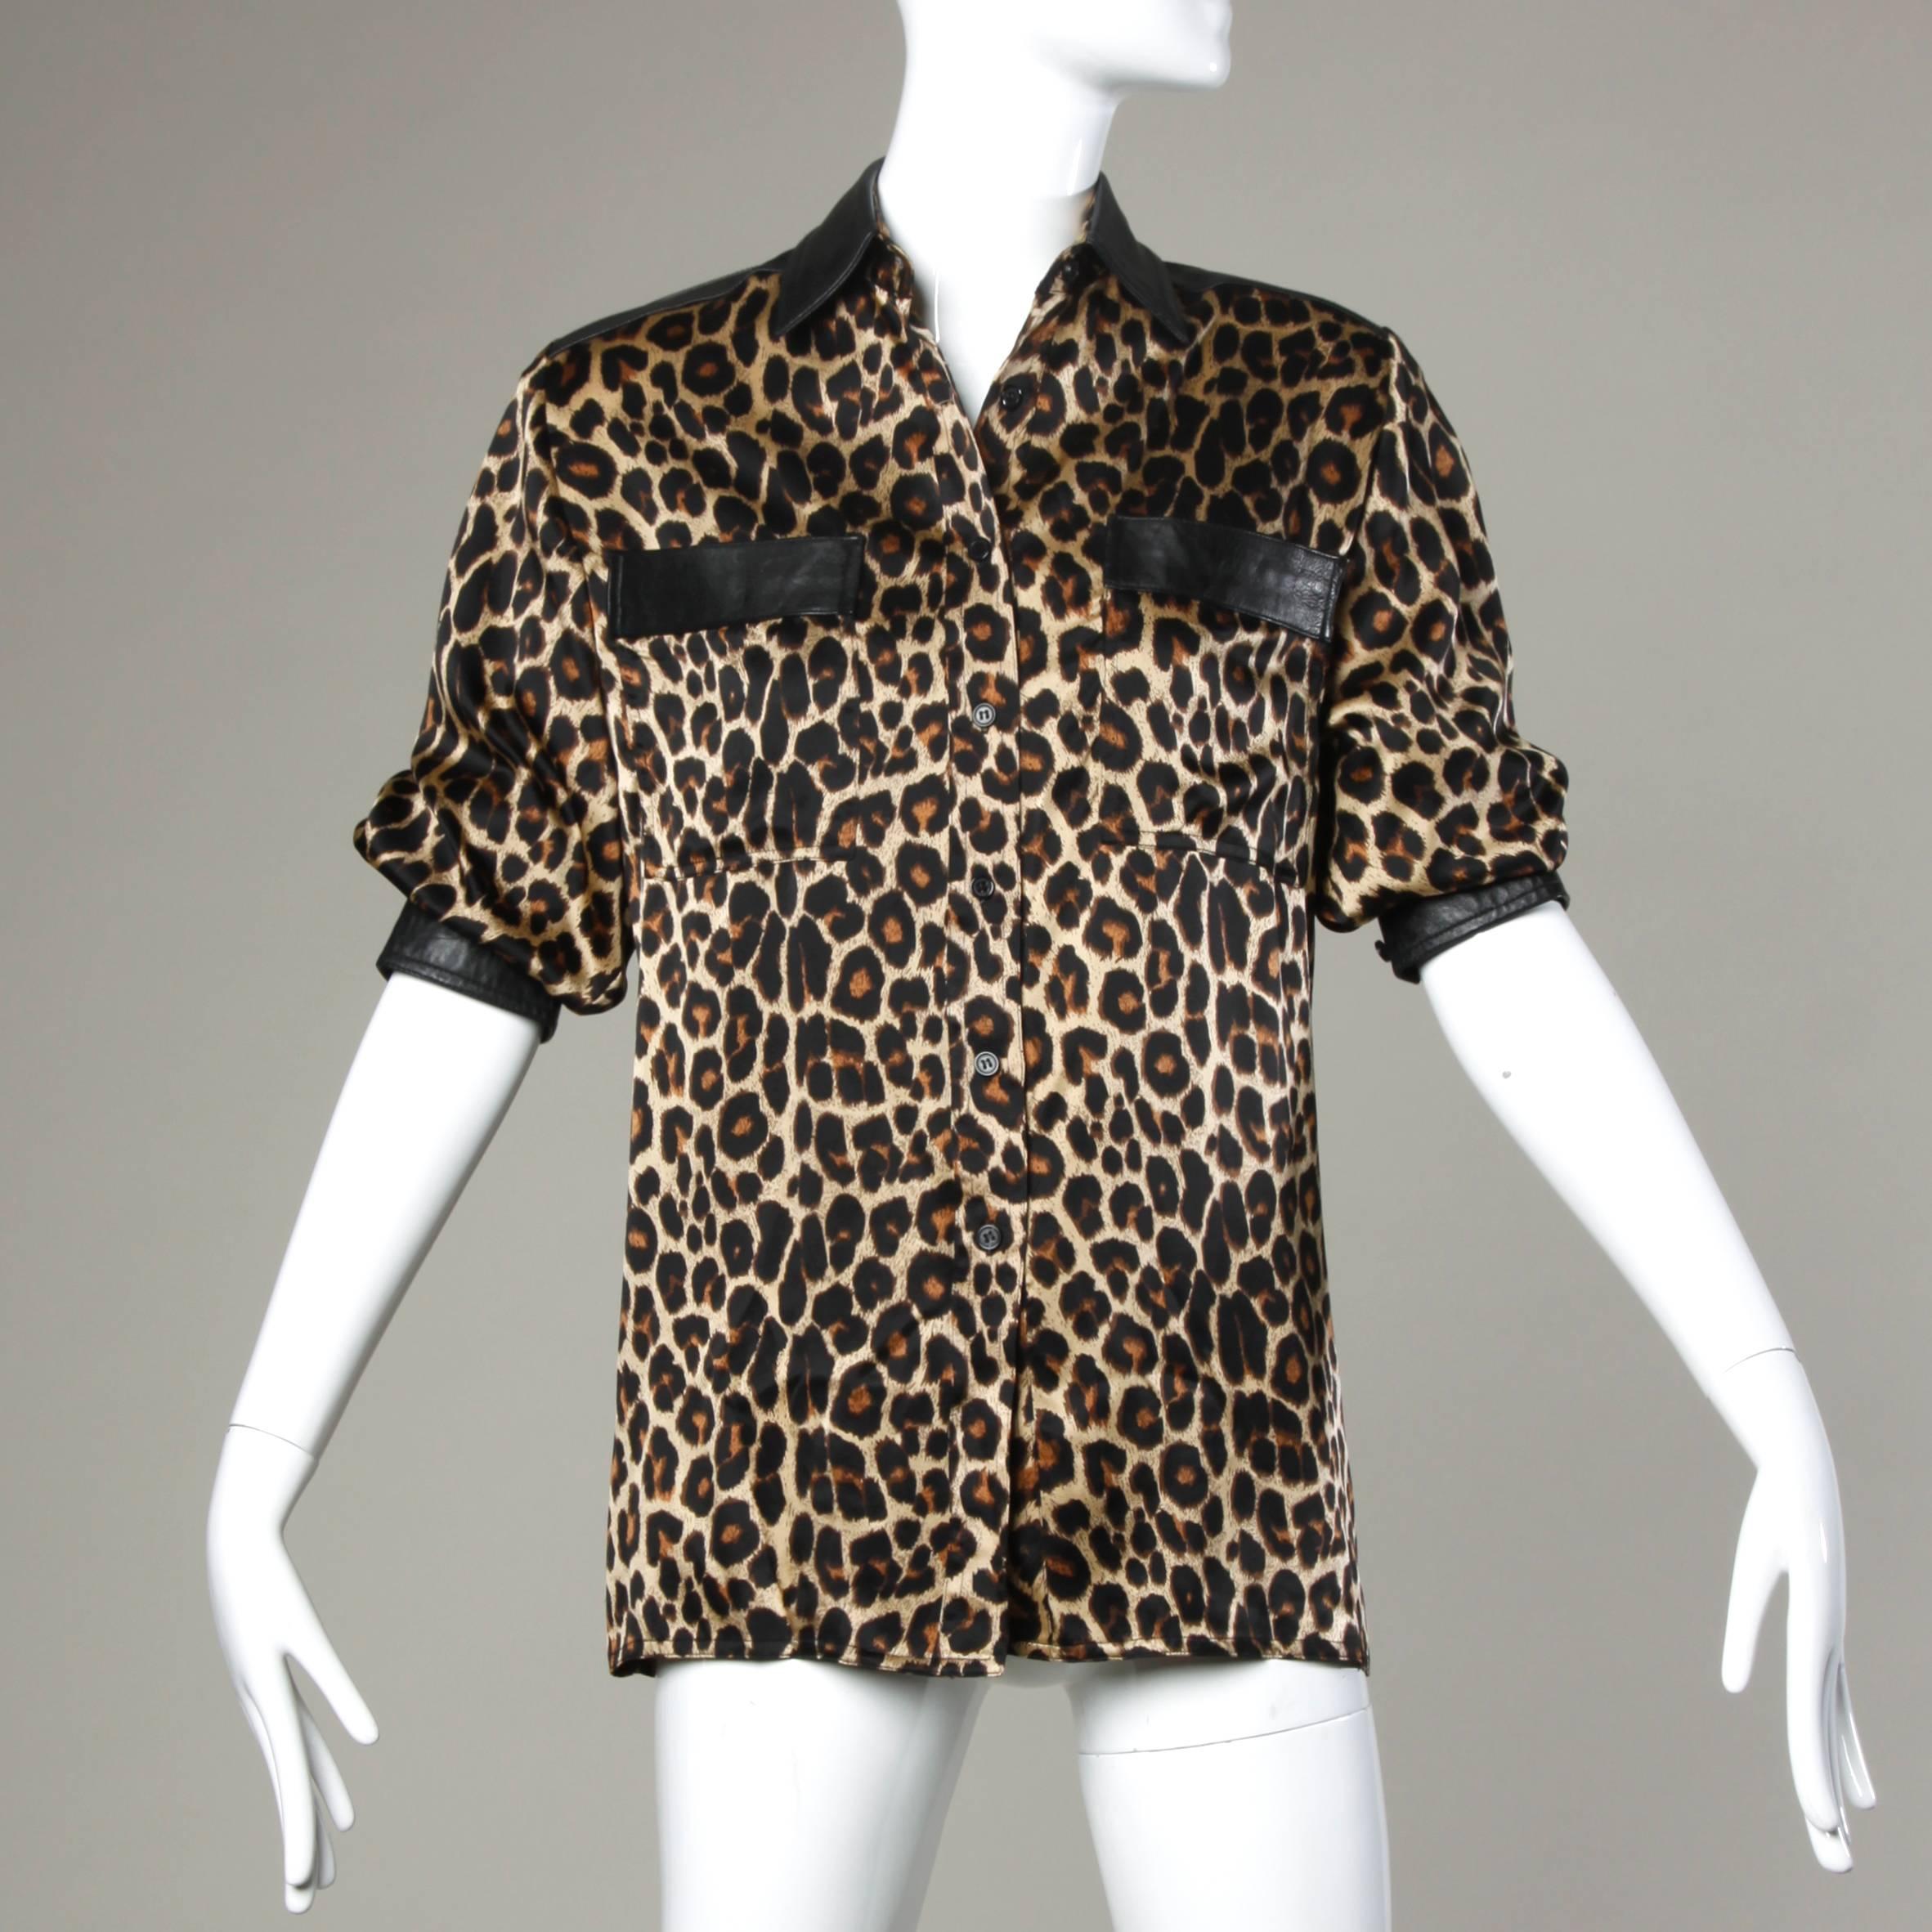 Lillie Rubin Vintage Silk Leopard Print Blouse with Leather Trim 1